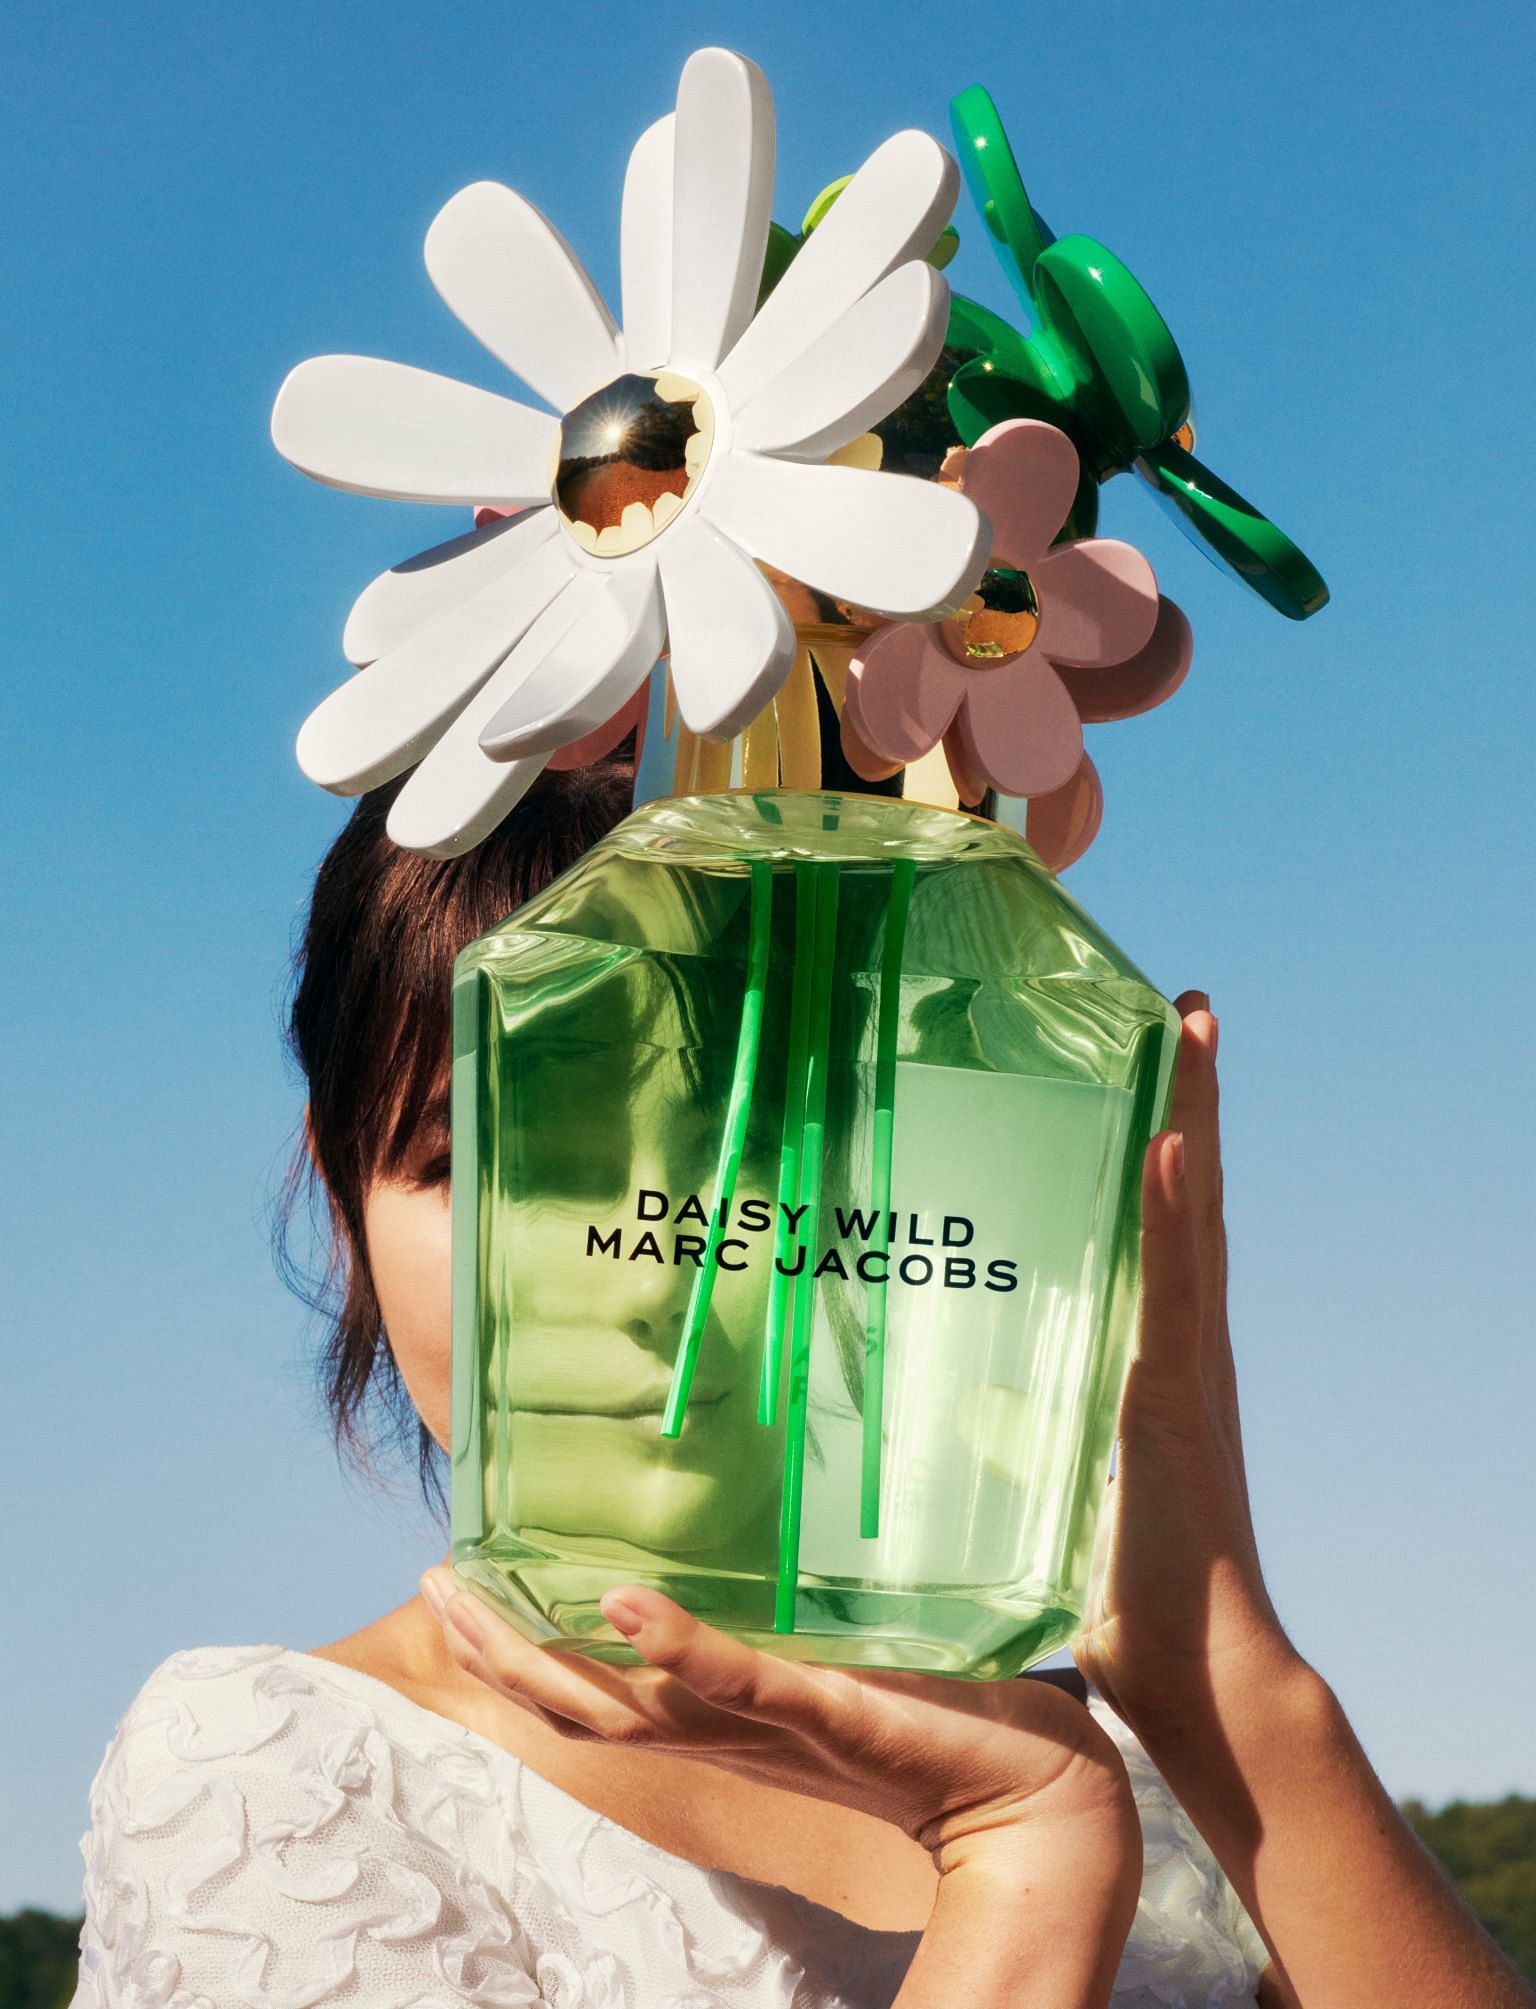 Marc Jacobs Daisy Wild fragrance bottle